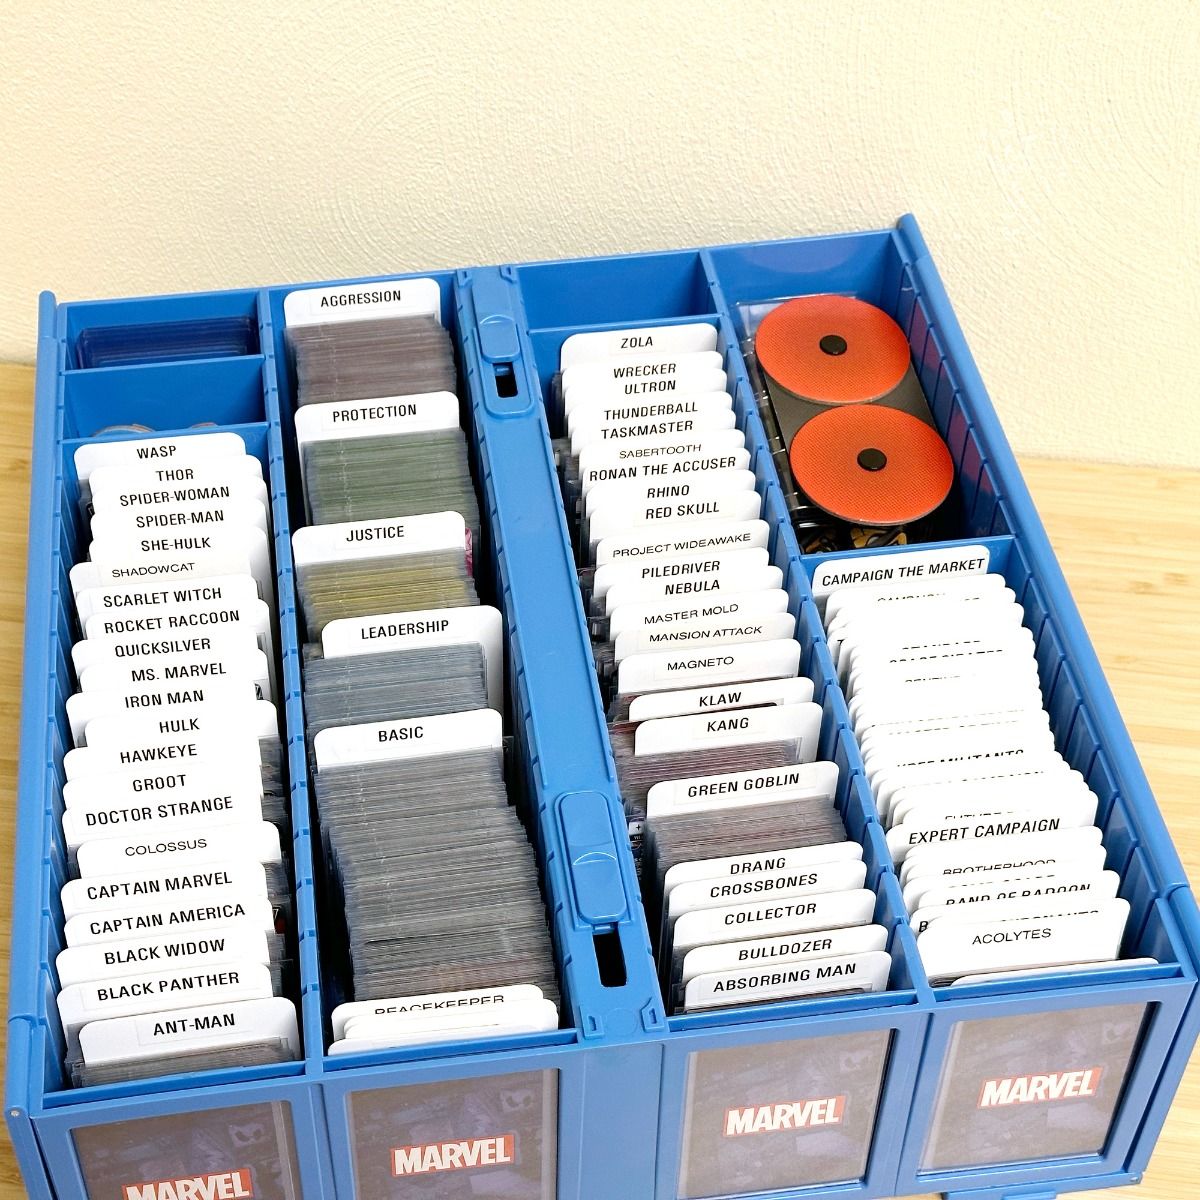 BCW Collectible Card Bin-3200-BLUE (4each/case)-BCW Supplies-Ace Cards &amp; Collectibles